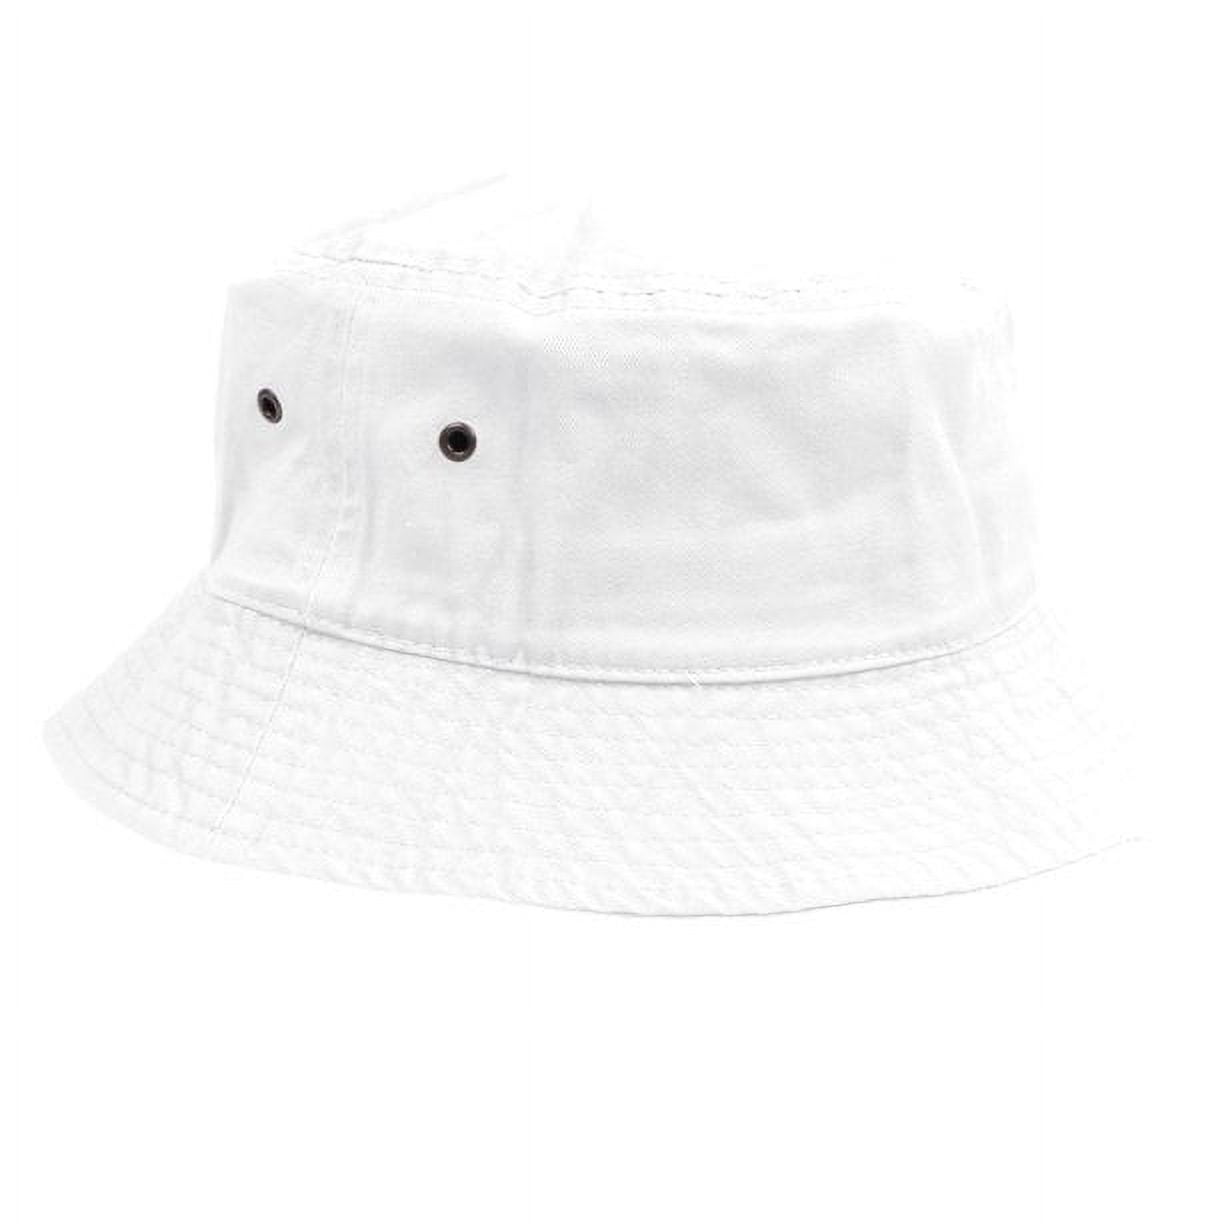 Sun Hat Womens, Beach Floppy Hats for Women Foldable, Wide Brim Summer  Packable Lace Sun Beach Floppy Hats Women